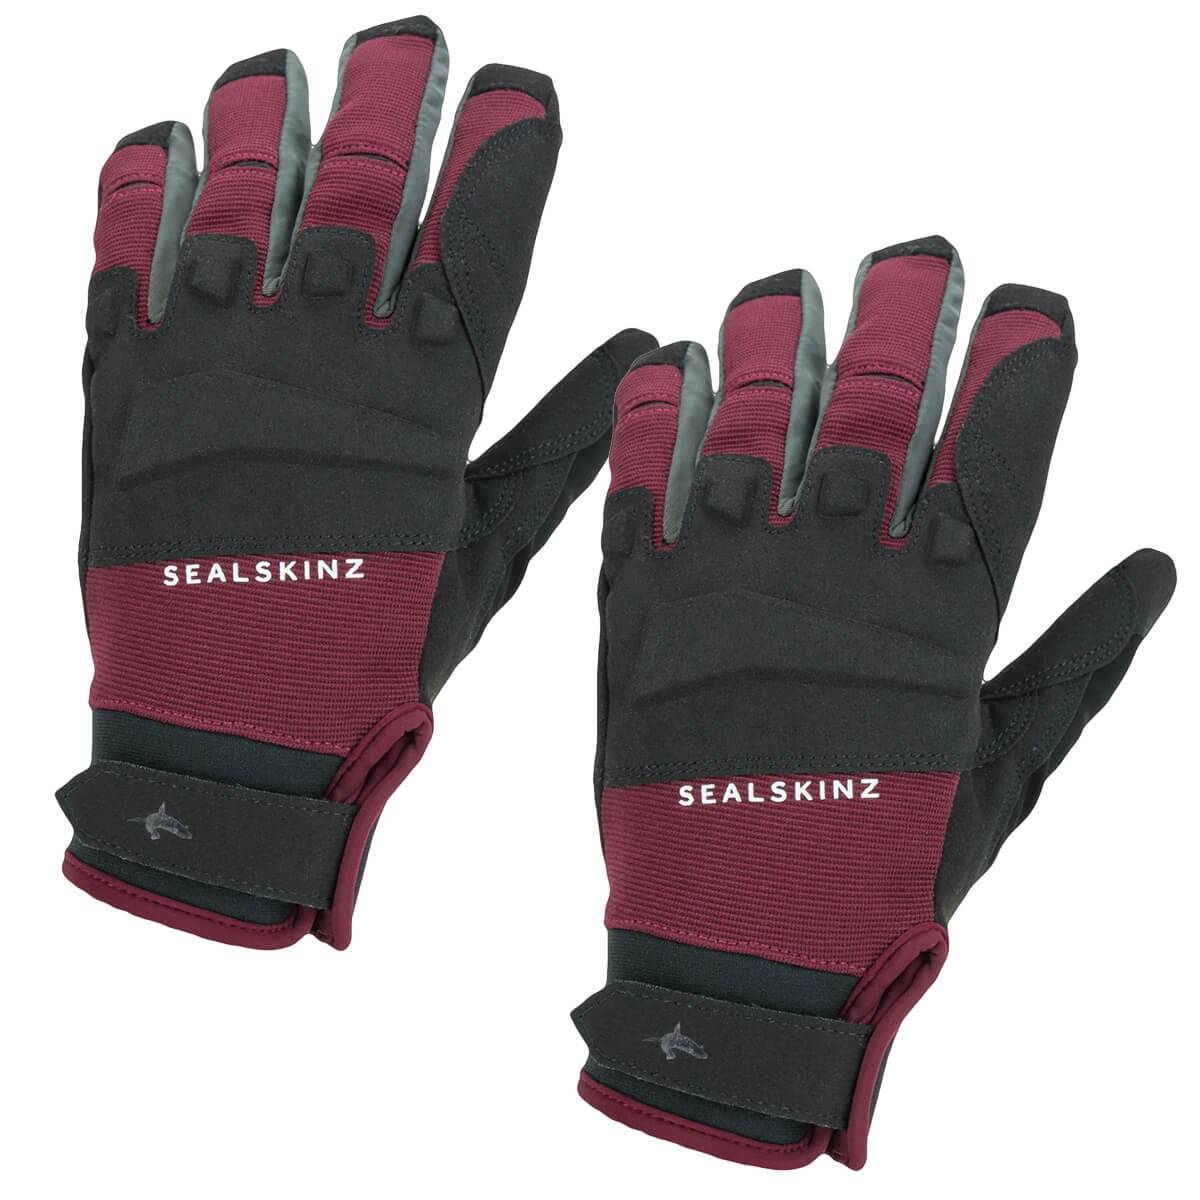 Sealskinz Waterproof All Weather Mountain Bike Glove - John Bull Clothing